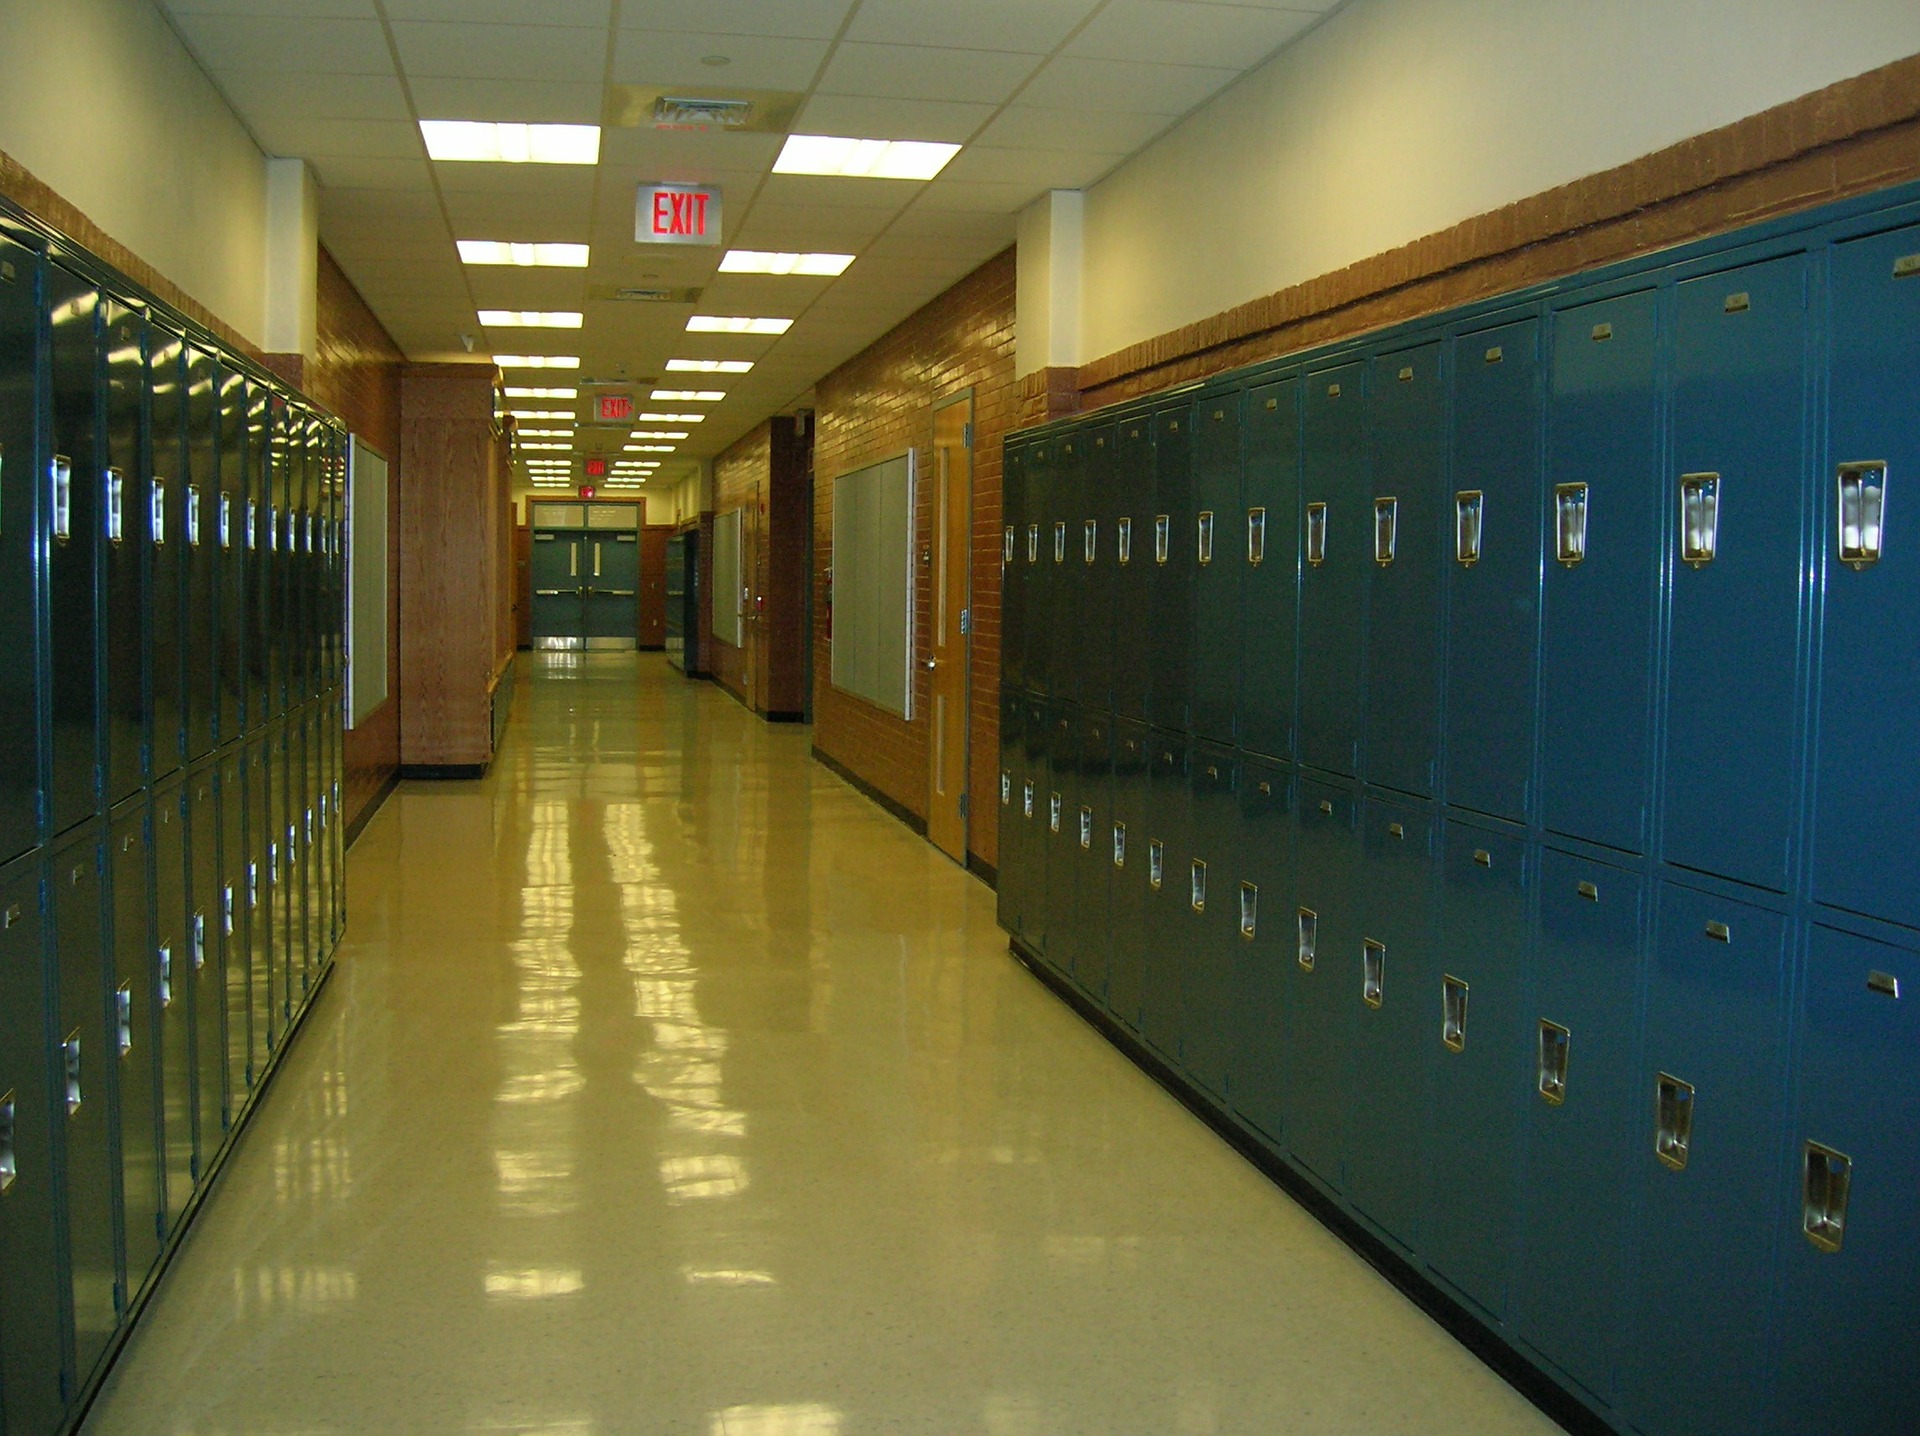 school hallway lines with lockers